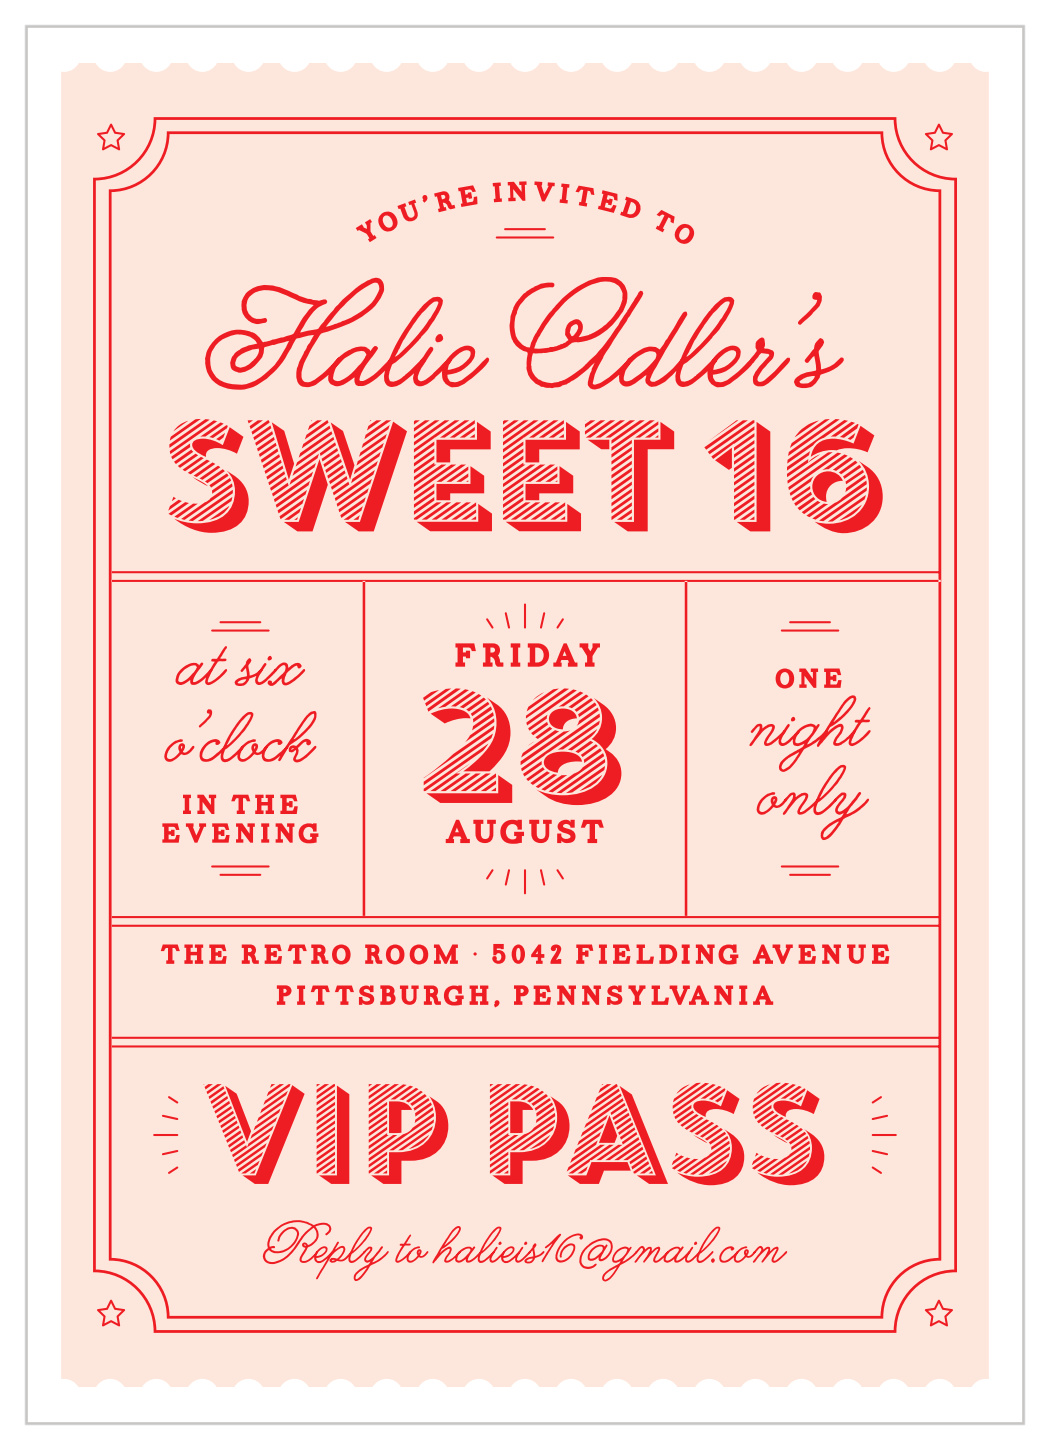 VIP Pass Sweet Sixteen Invitations by Basic Invite